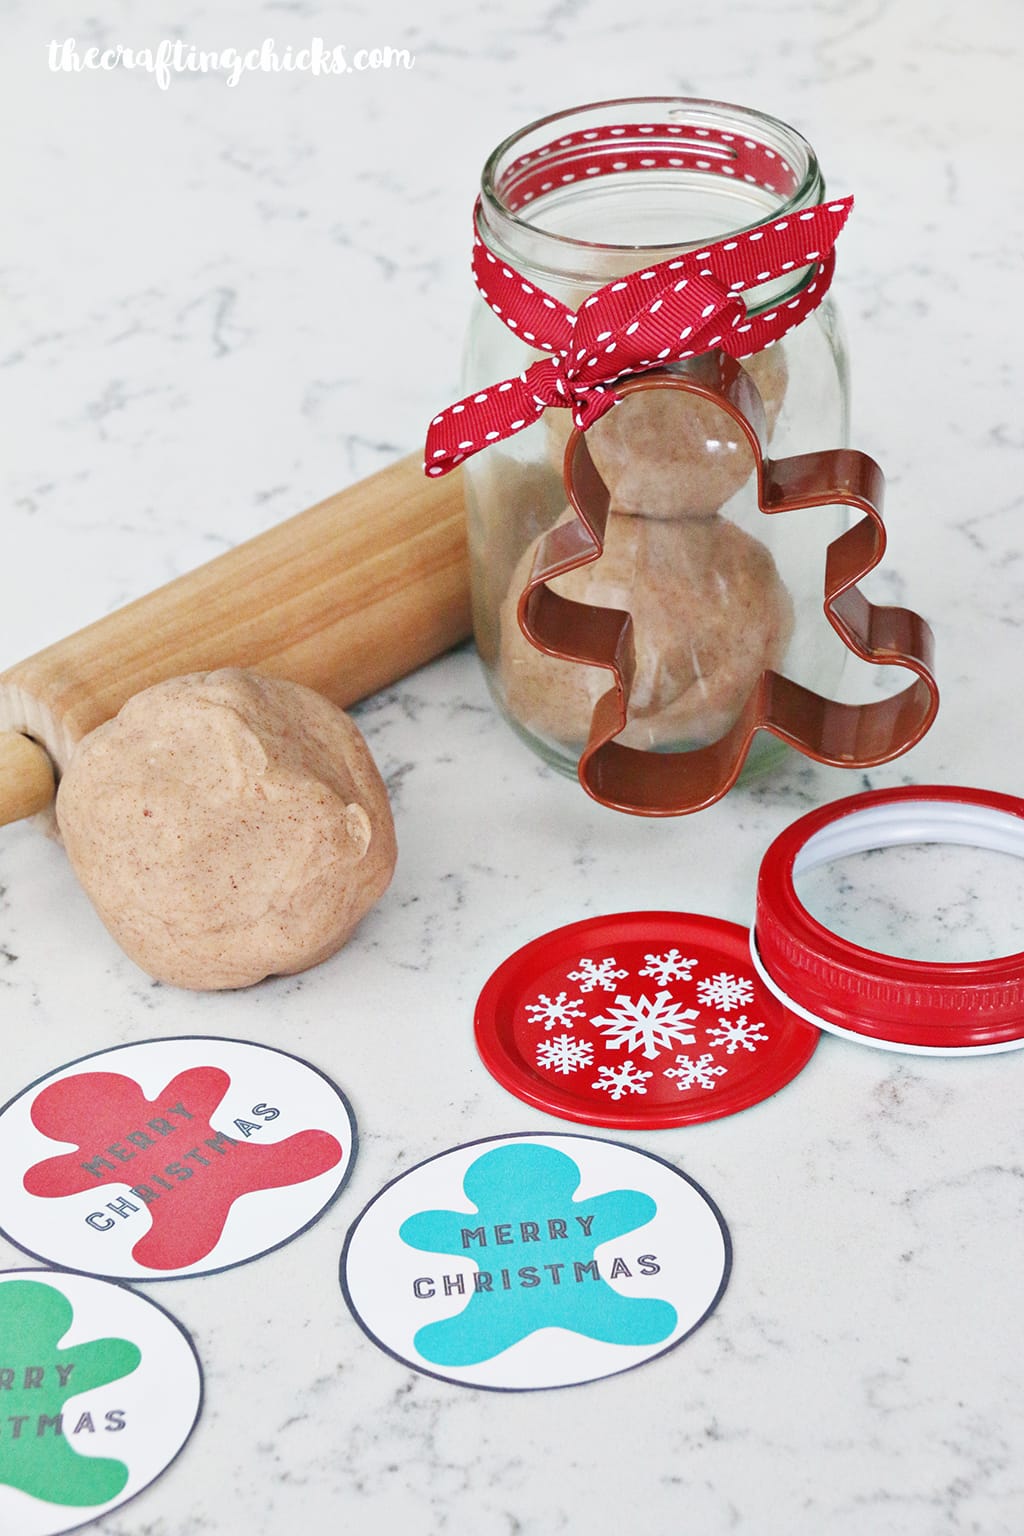 Gingerbread Gift Tag Printable - A simple Christmas neighbor gift idea